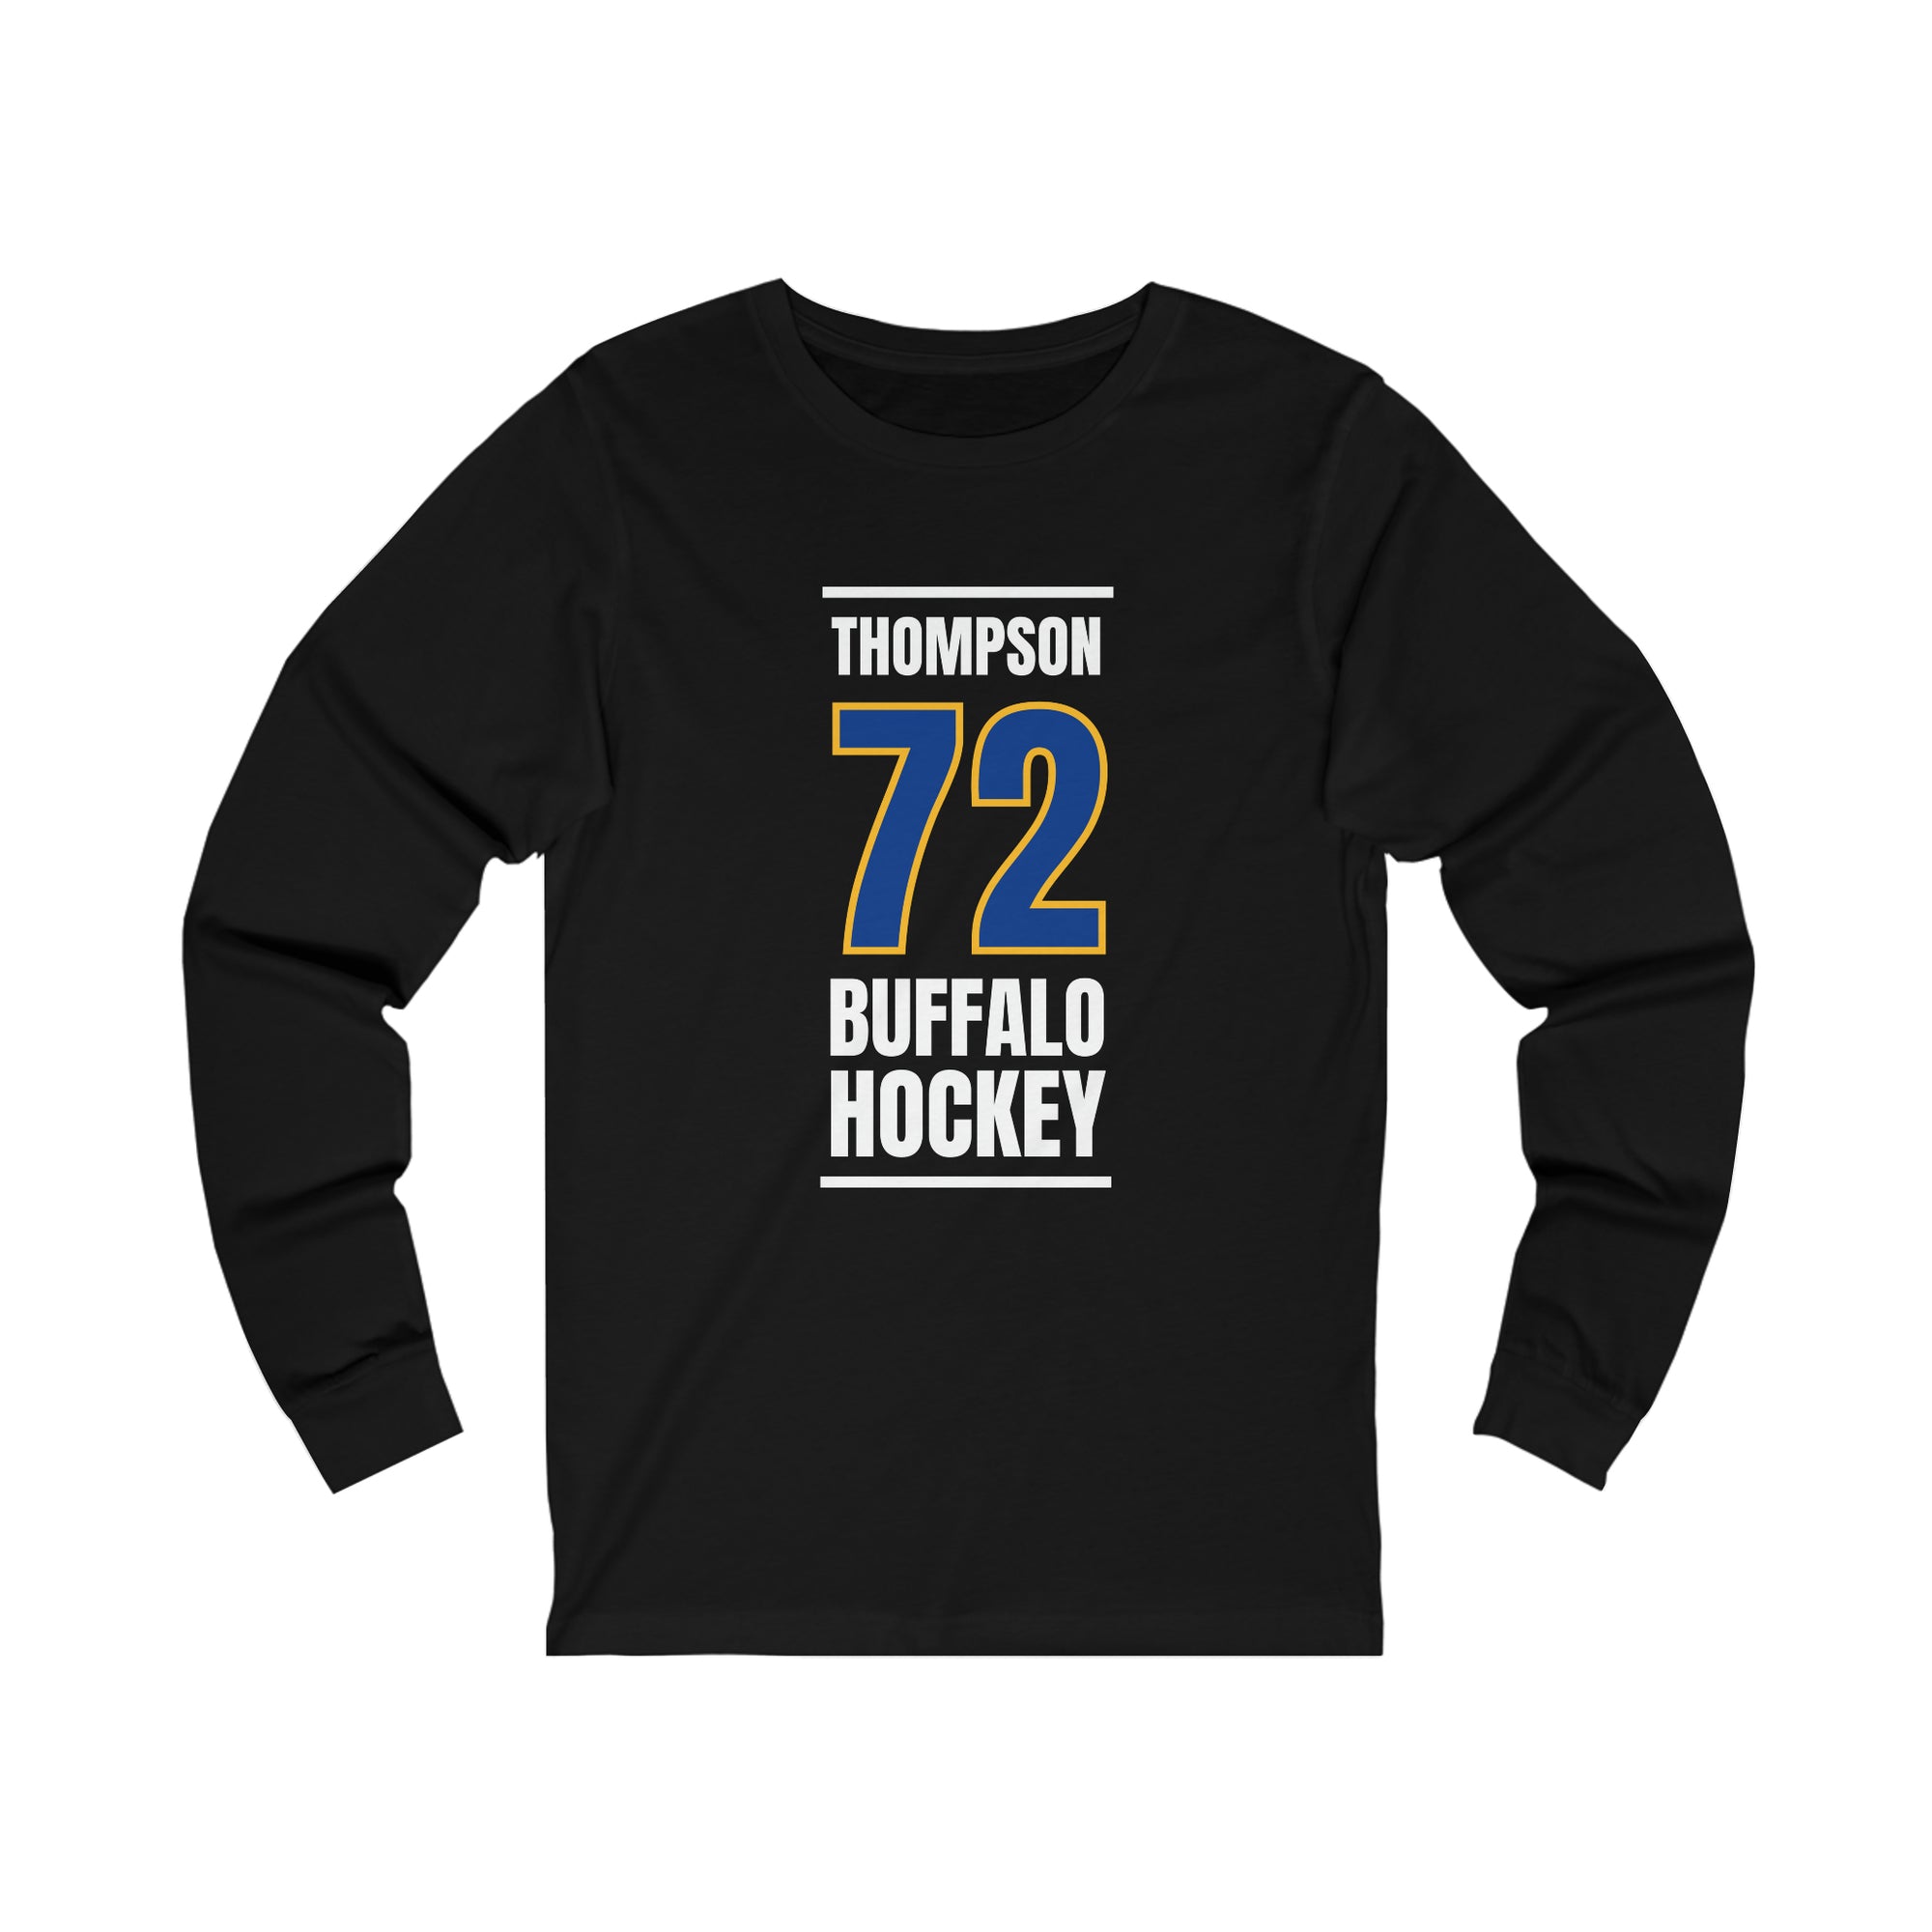 Thompson 72 Buffalo Hockey Royal Blue Vertical Design Unisex Jersey Long Sleeve Shirt